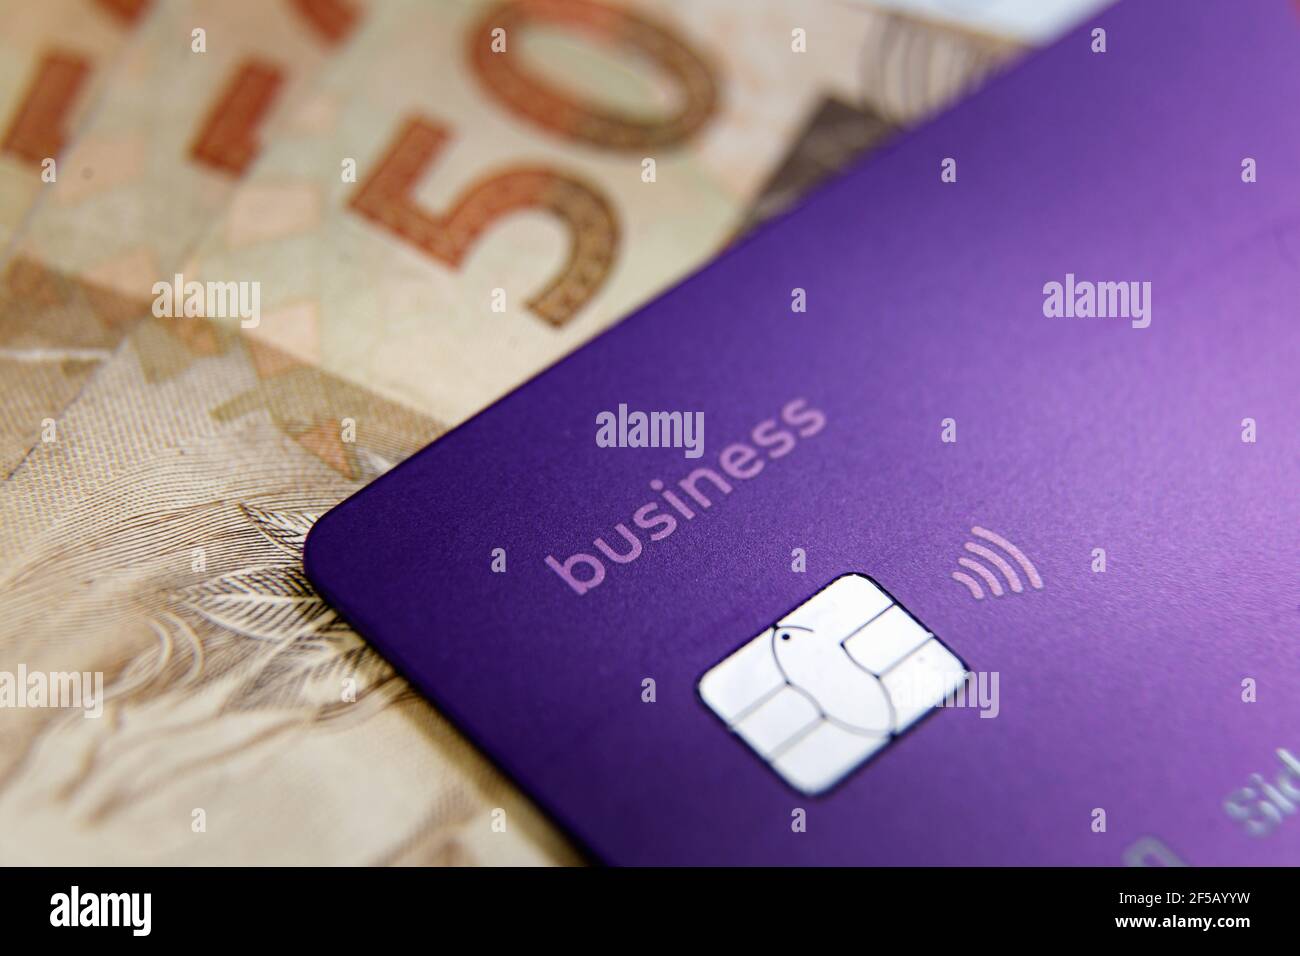 Minas Gerais, Brazil - March 25, 2021: Nubank Business credit card detail. Digital payment system - selective focus Stock Photo